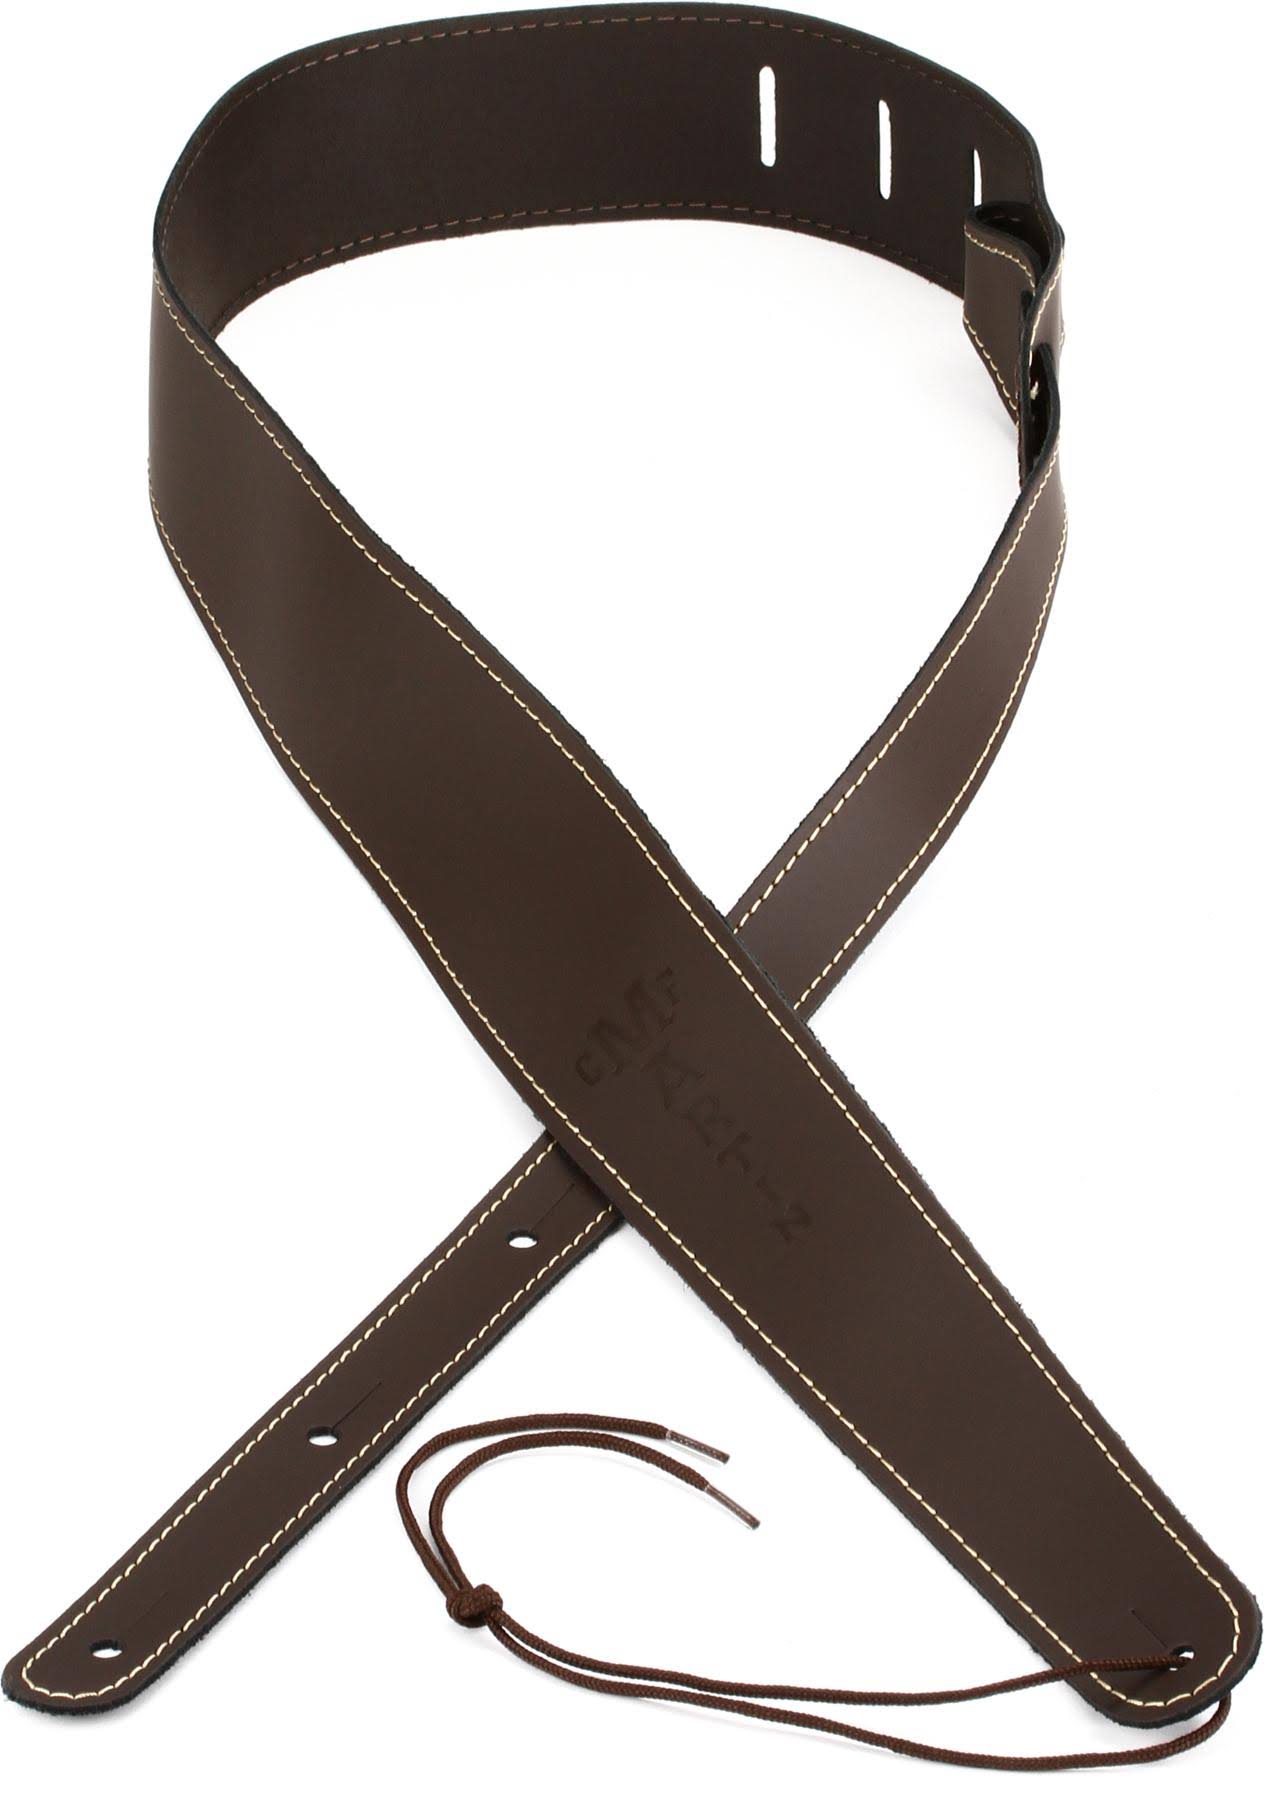 Martin Adjustable Guitar Strap - Brown Leather